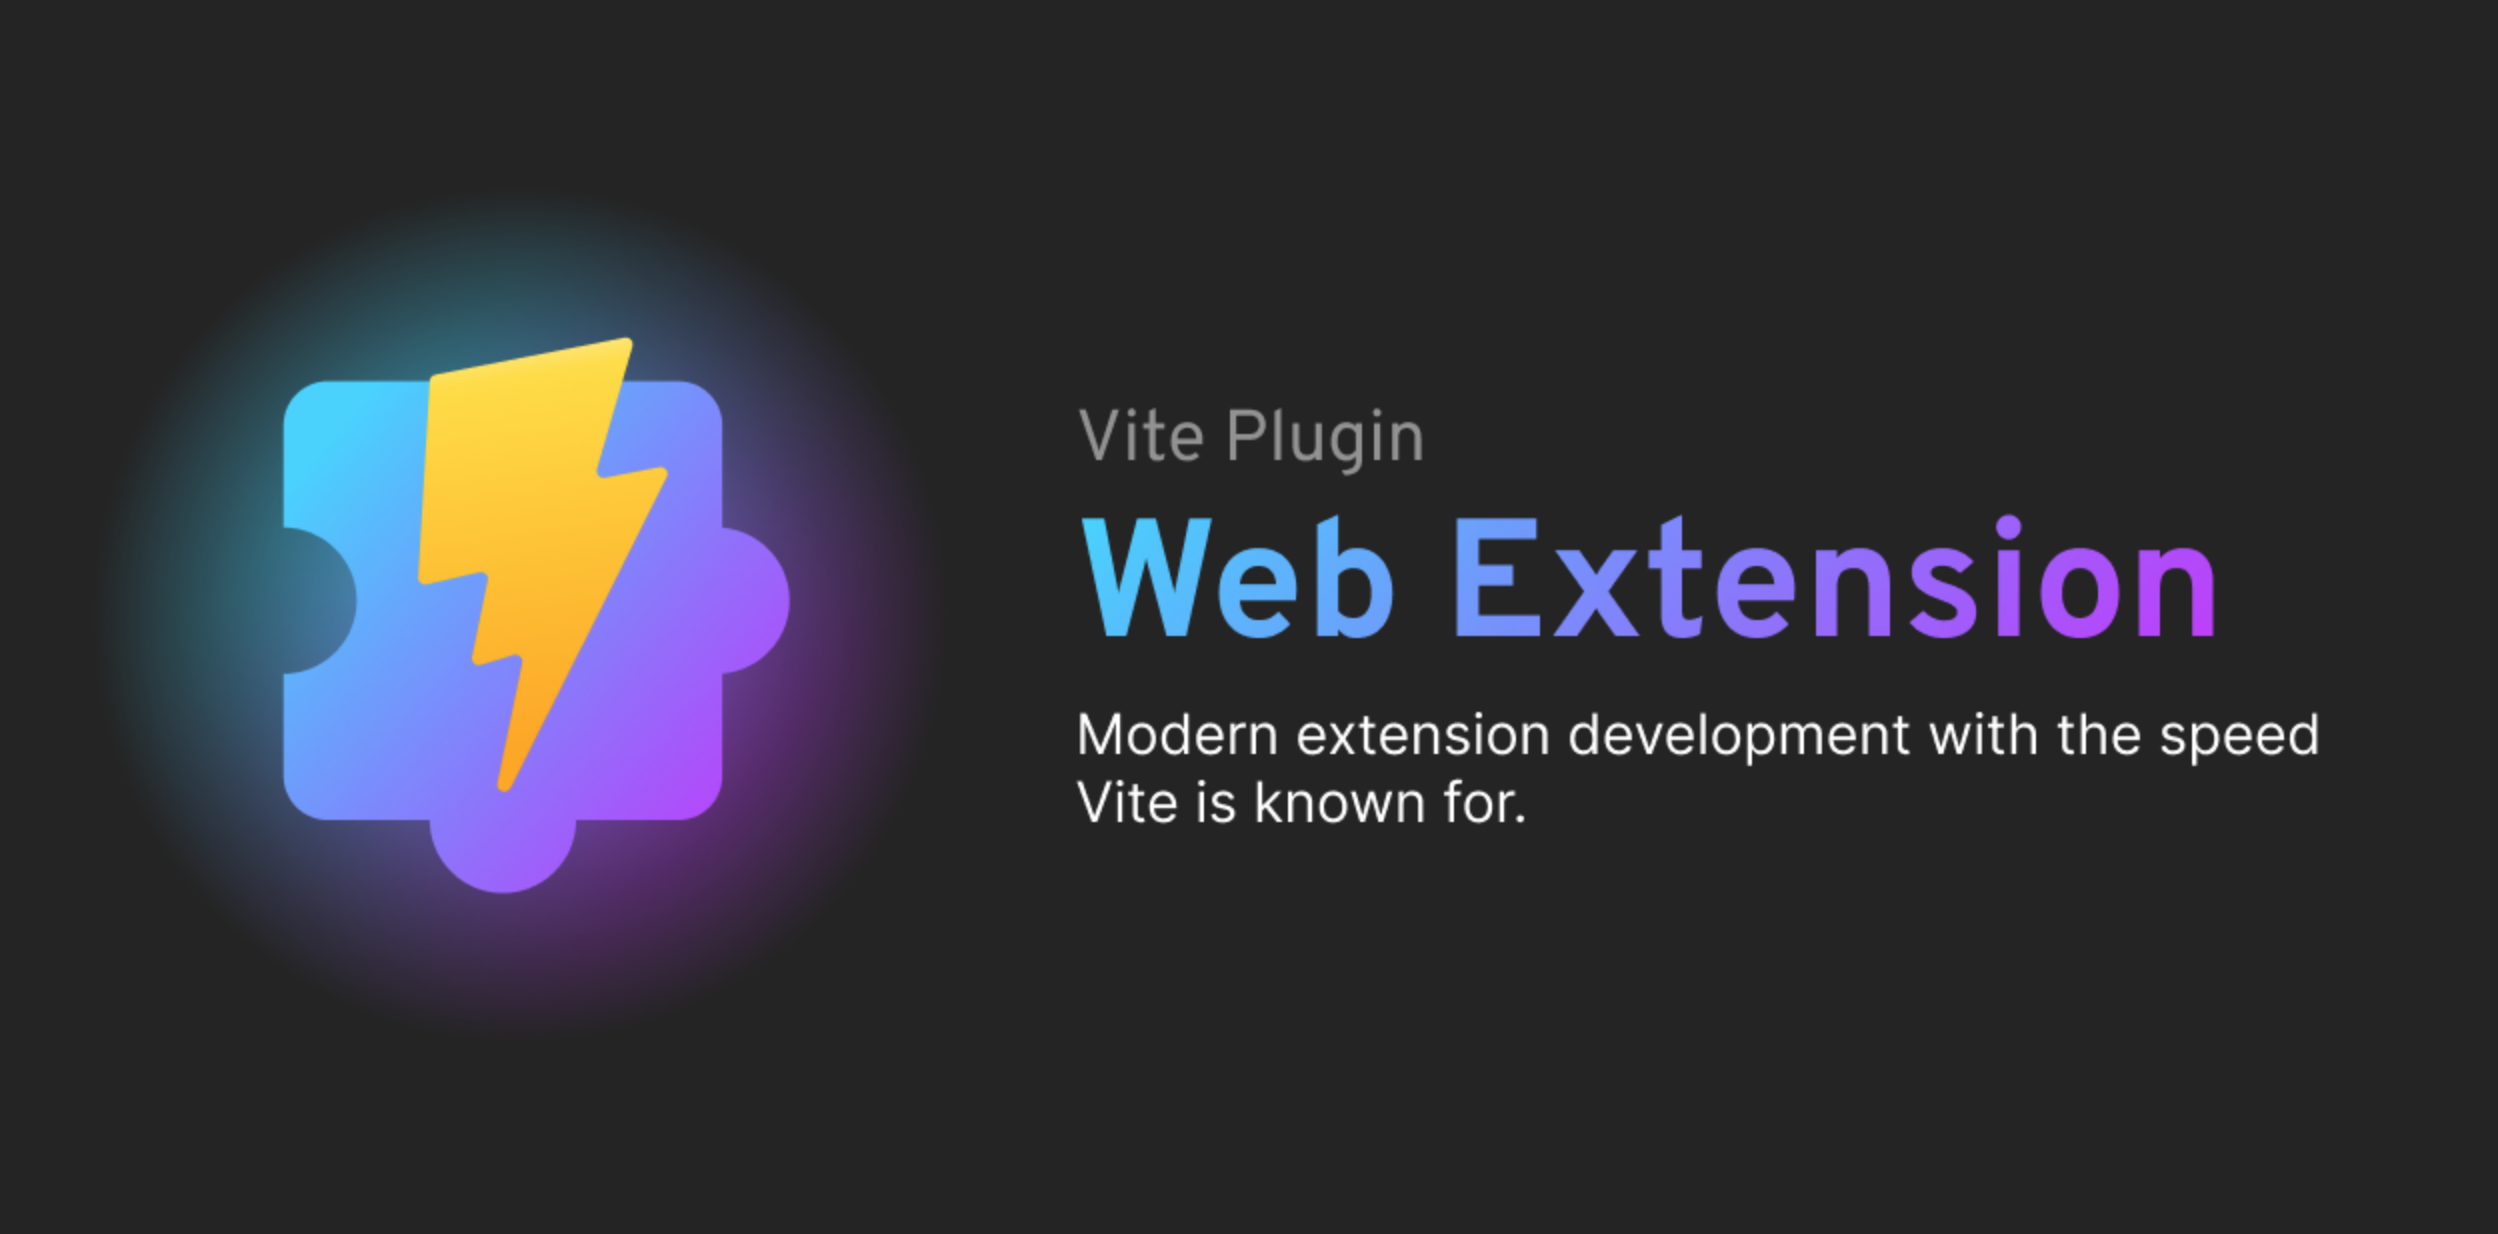 vite-plugin-web-extension cover image